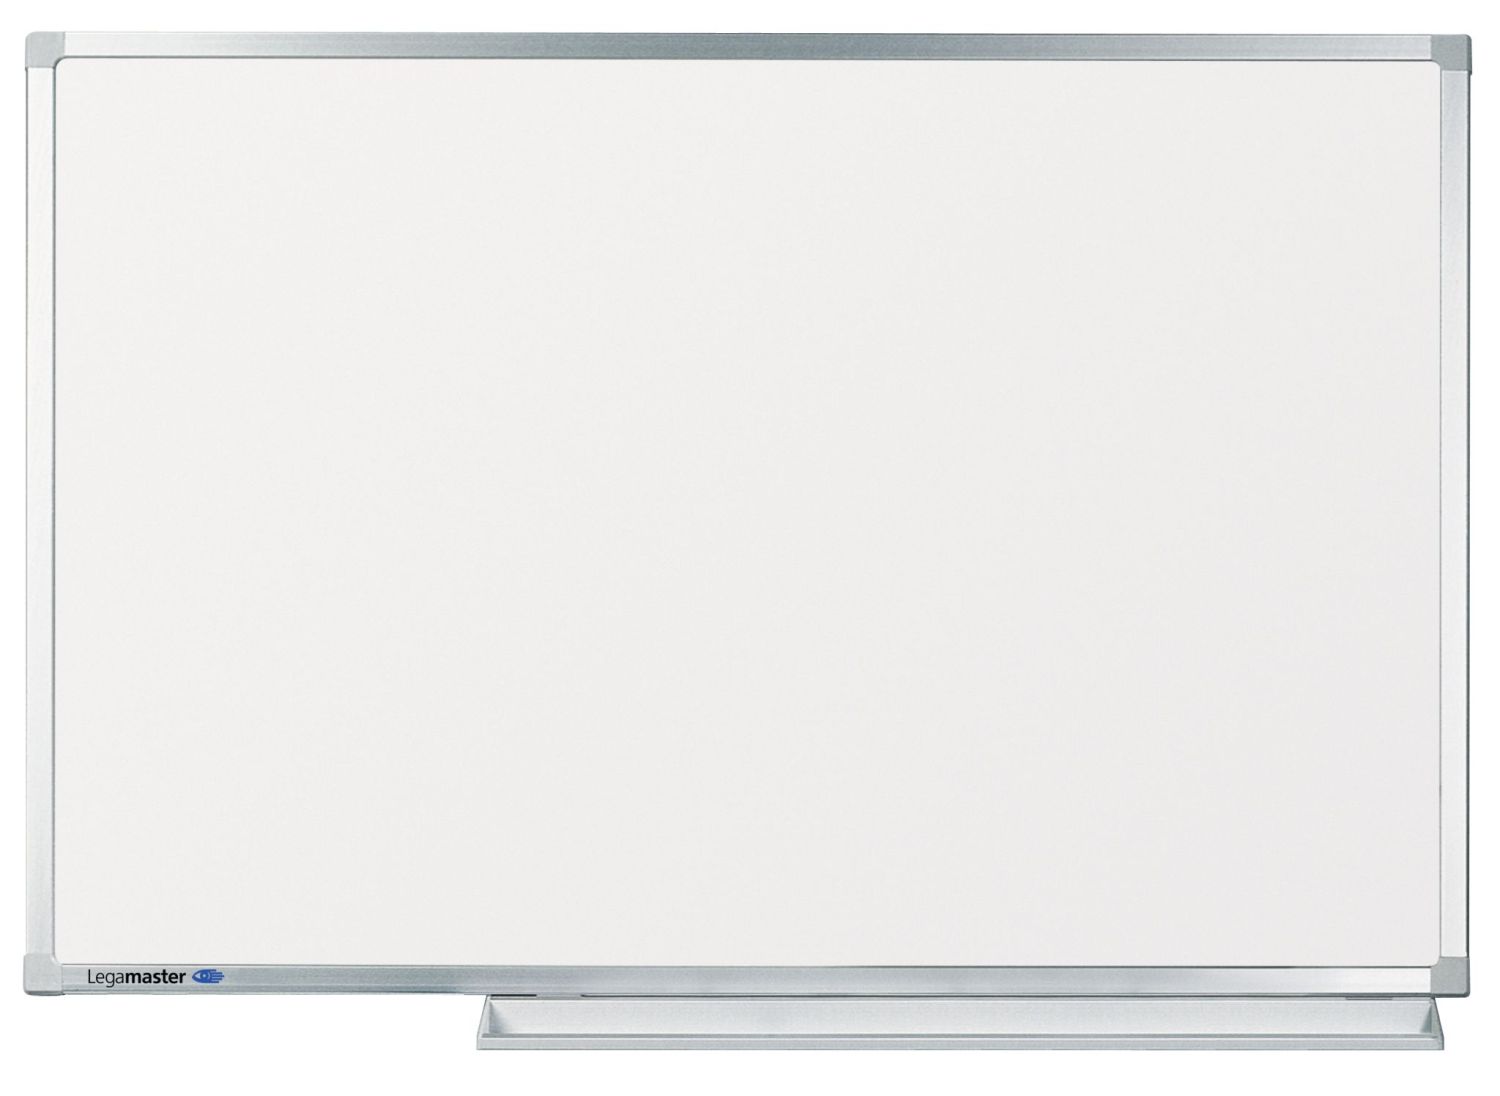 Whiteboard PROFESSIONAL - 300 x 155 cm, Montagesatz